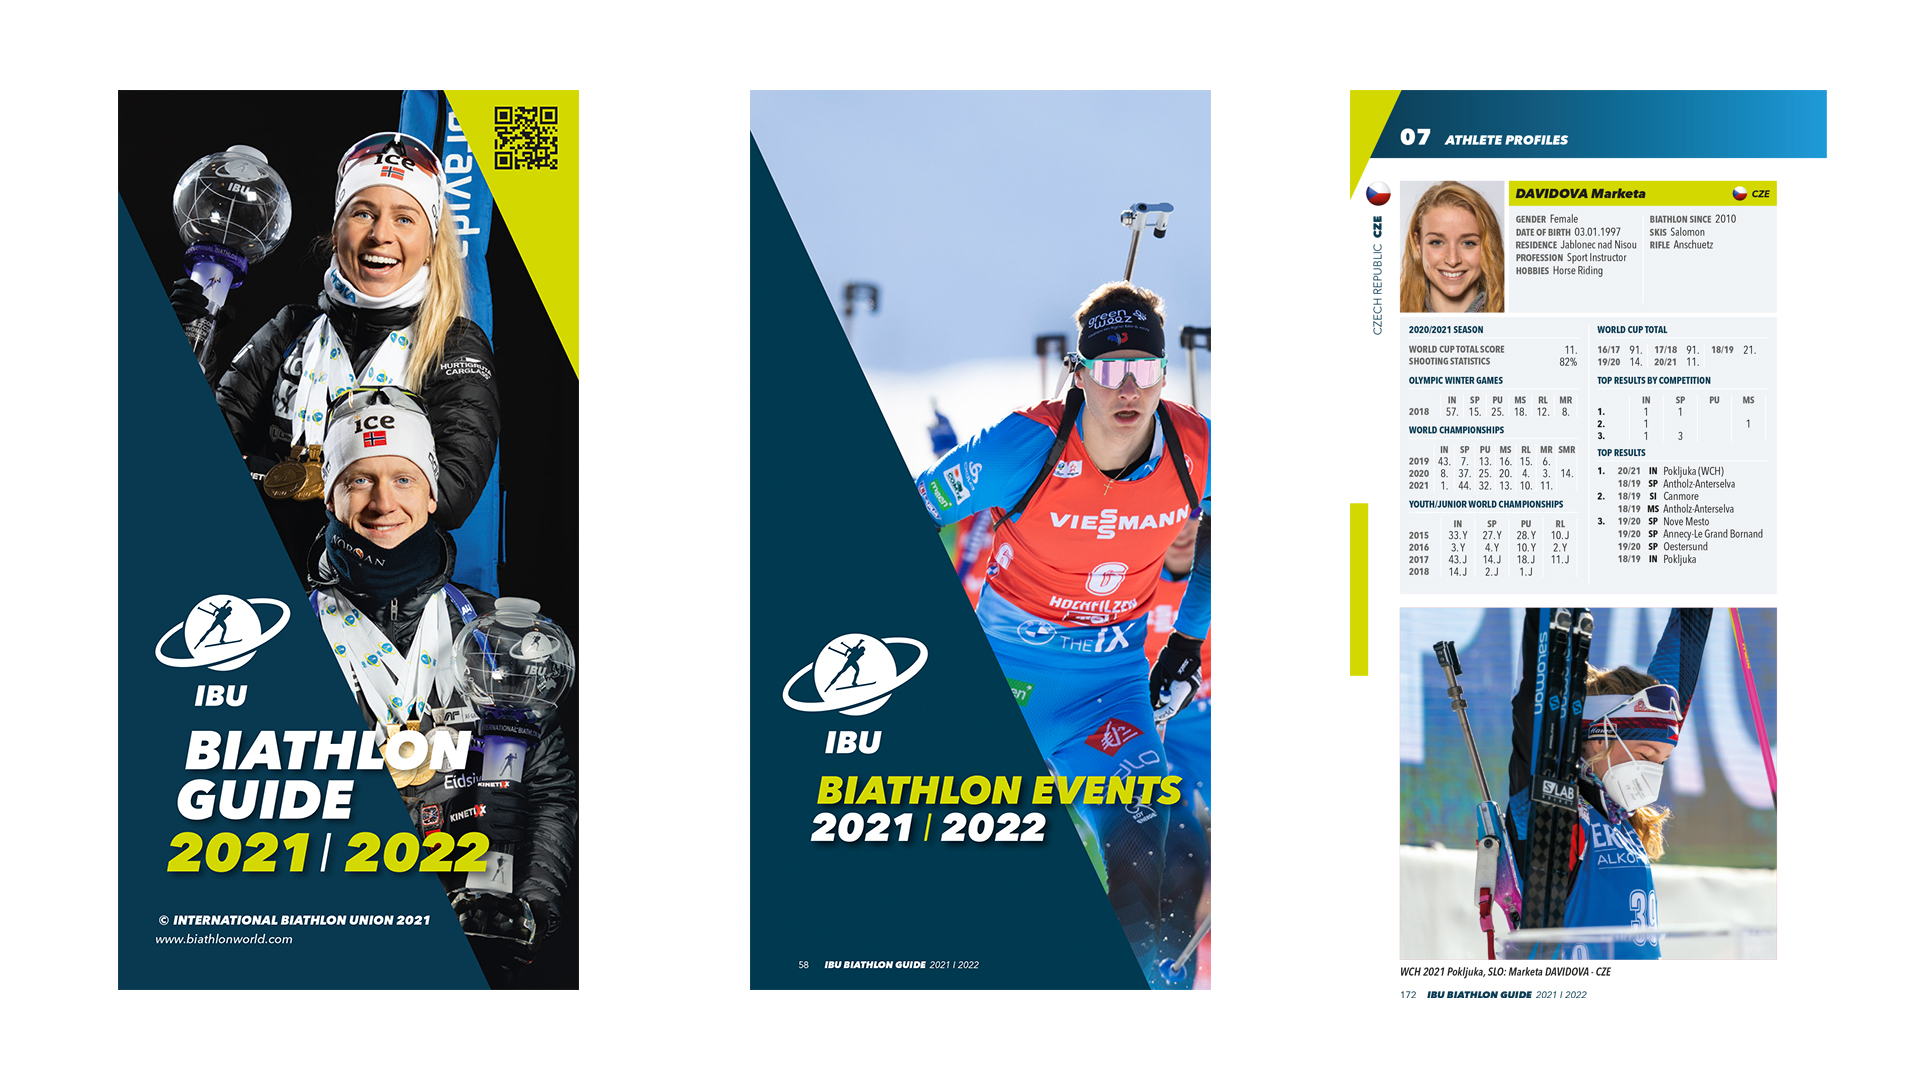 IBU Biathlon Guide 2021/2022